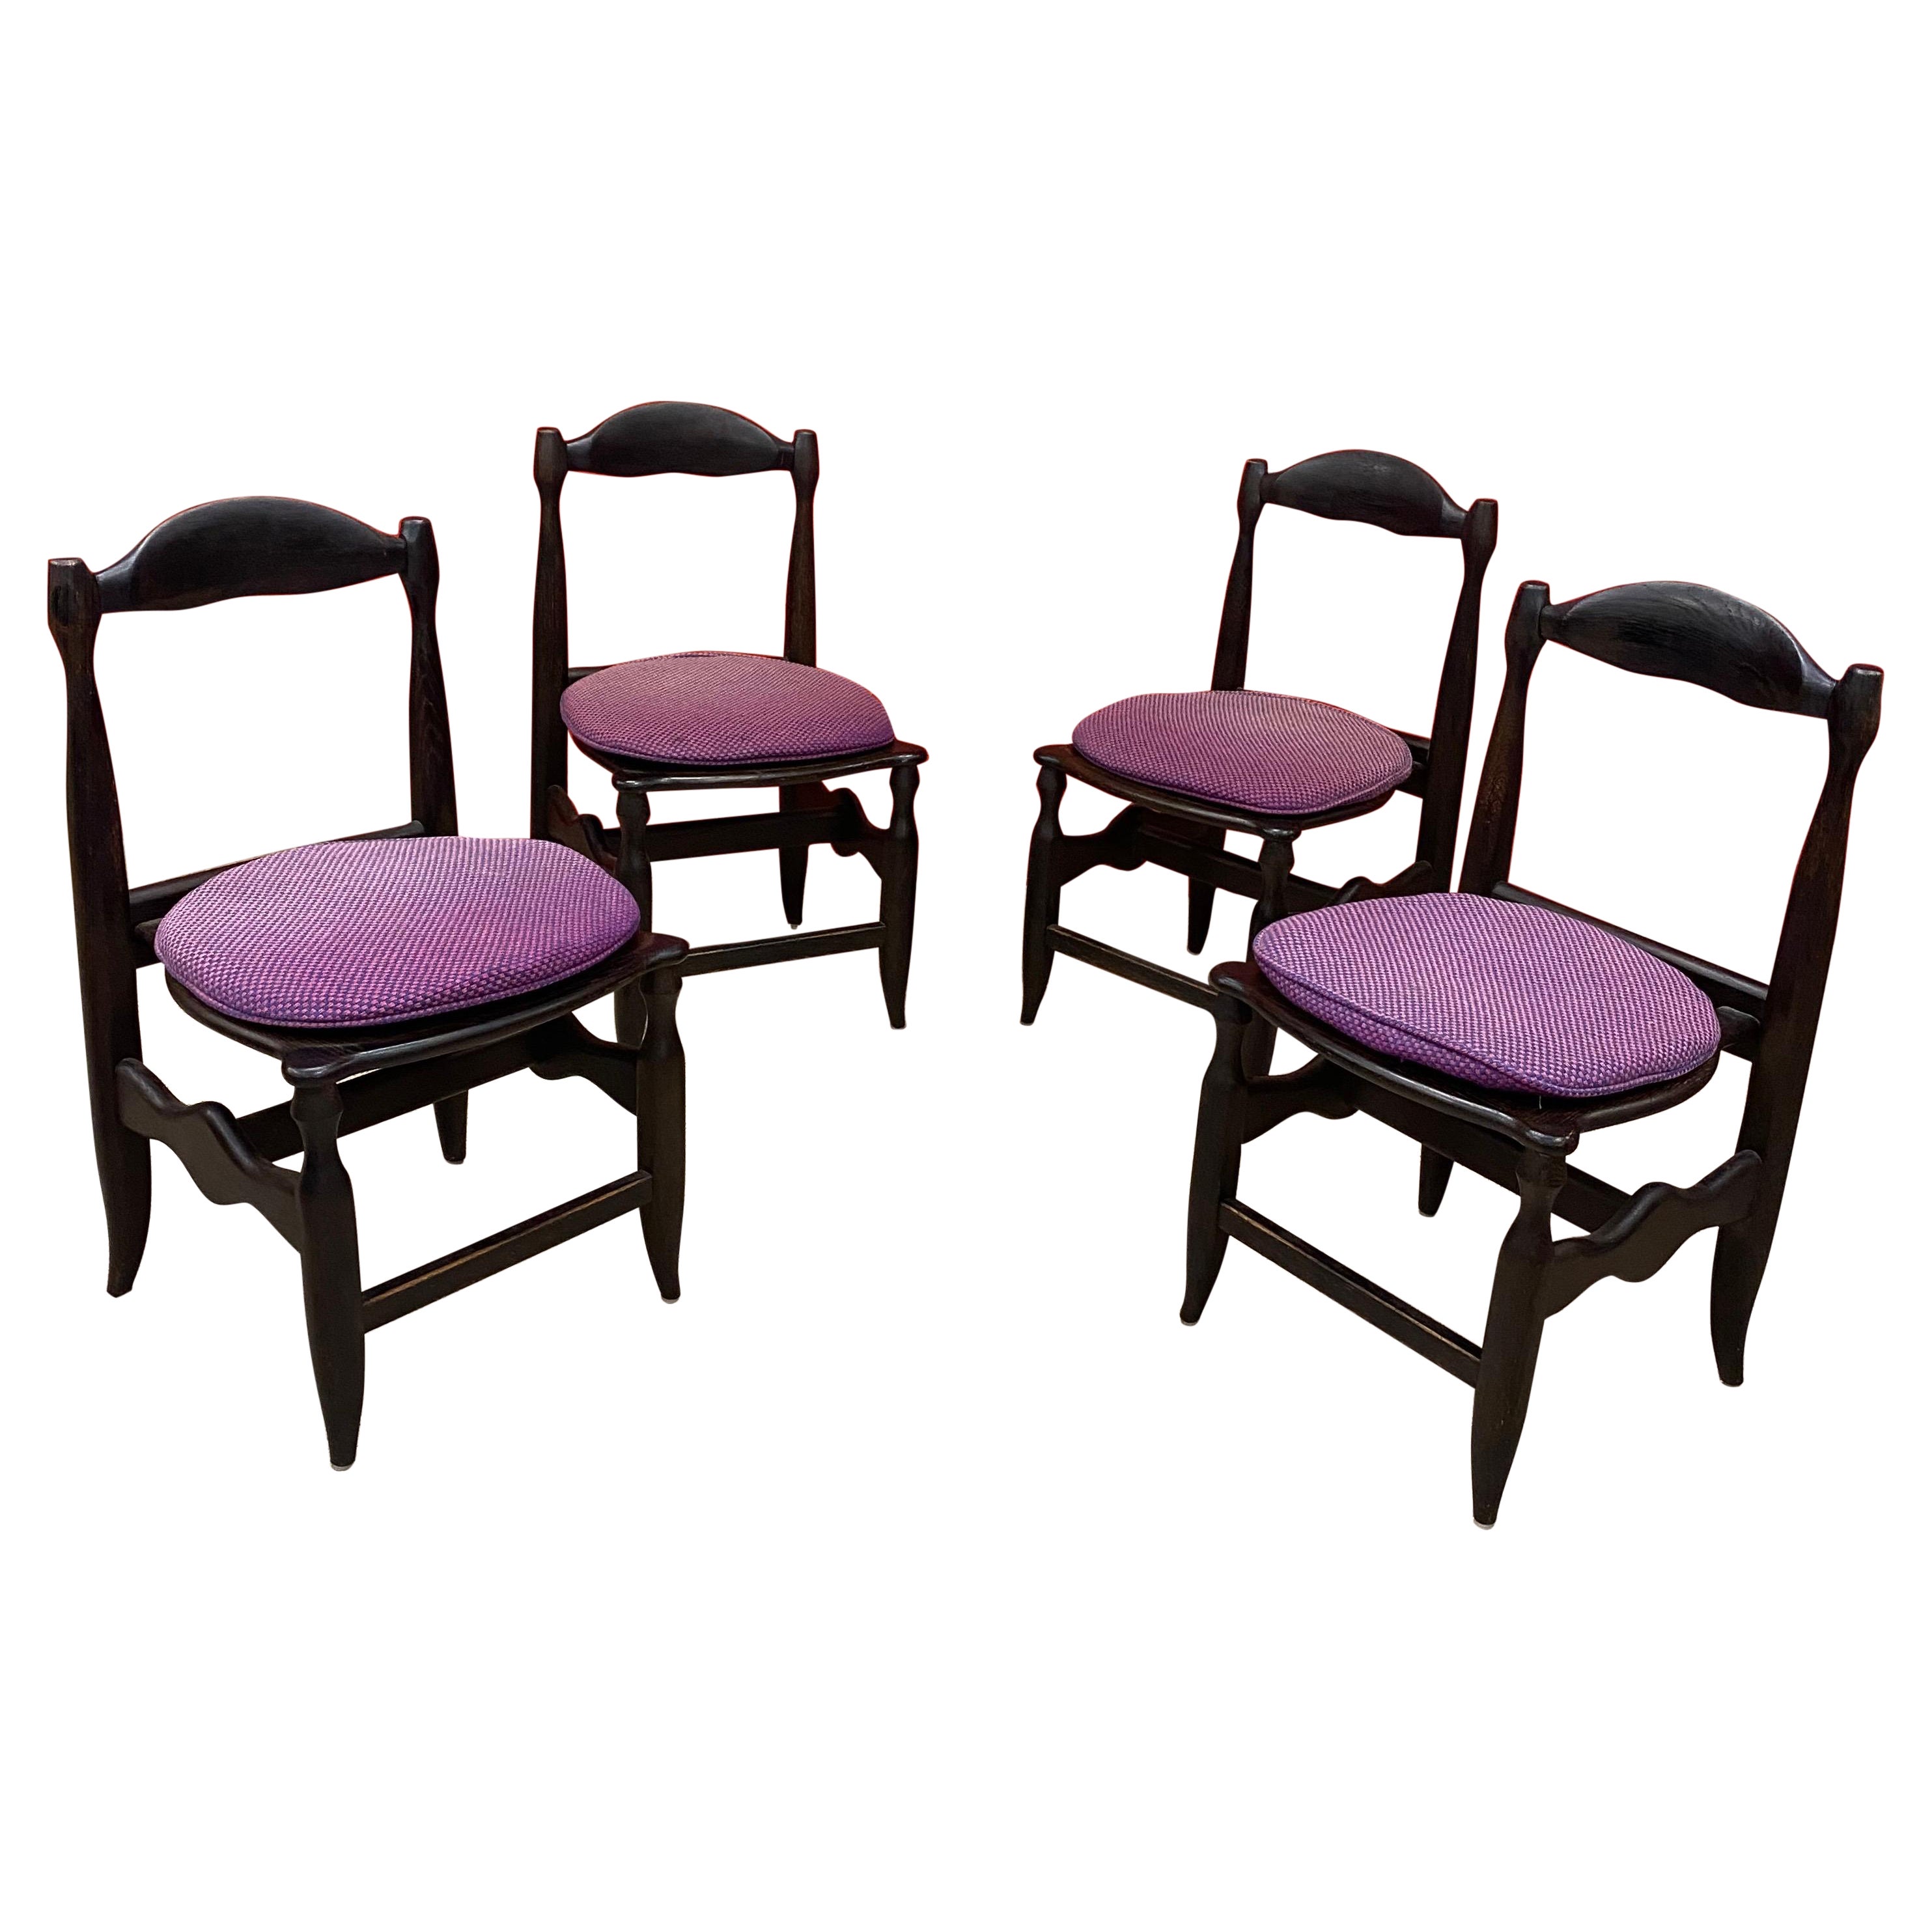 Guillerme et Chambron 4 Chairs in Blackened Oak, "Edition Votre Maison" For Sale